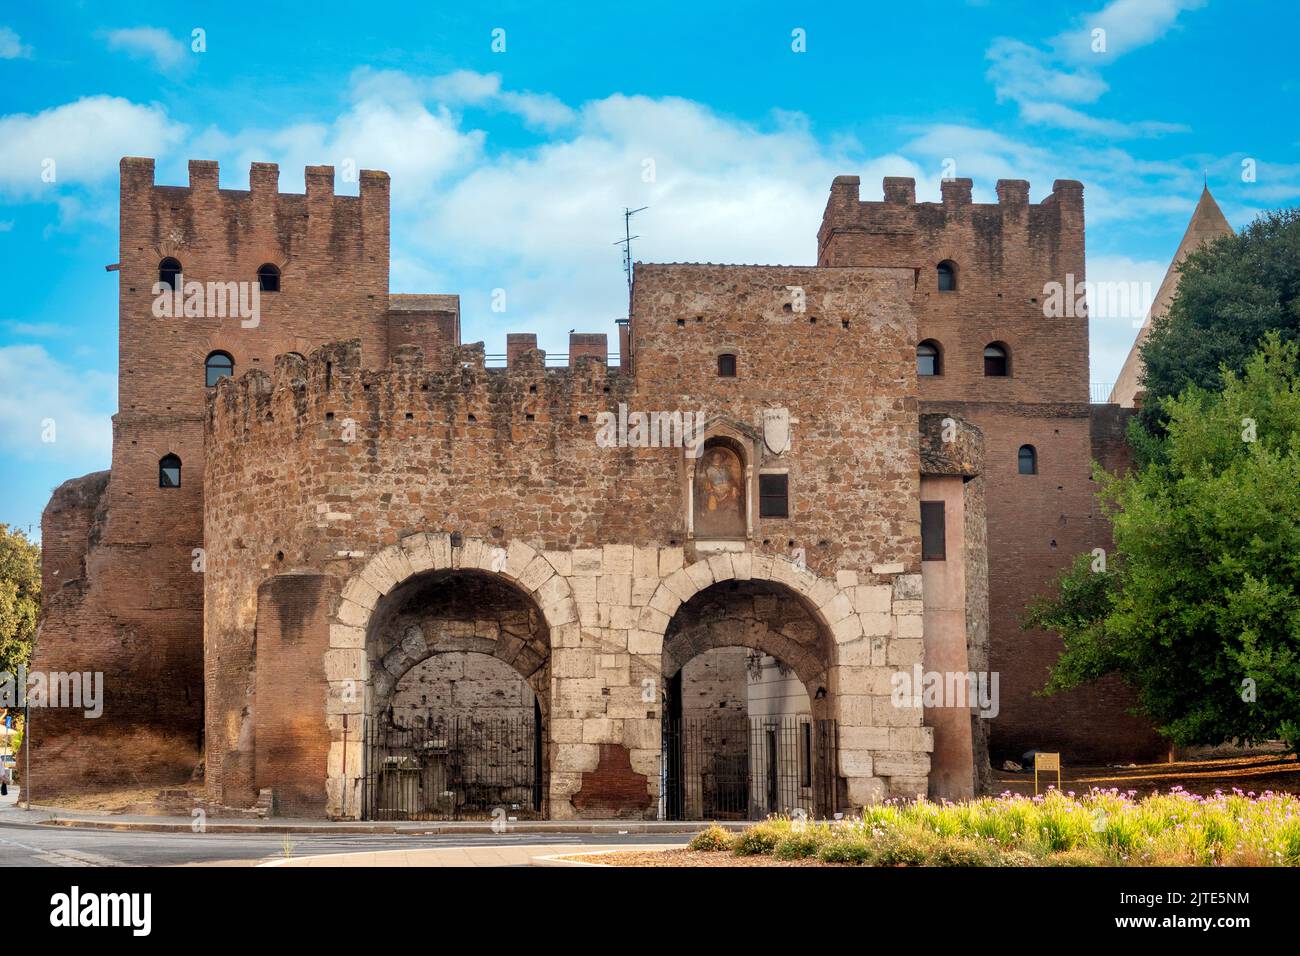 Porta San Paolo, Roma, Italia Foto de stock